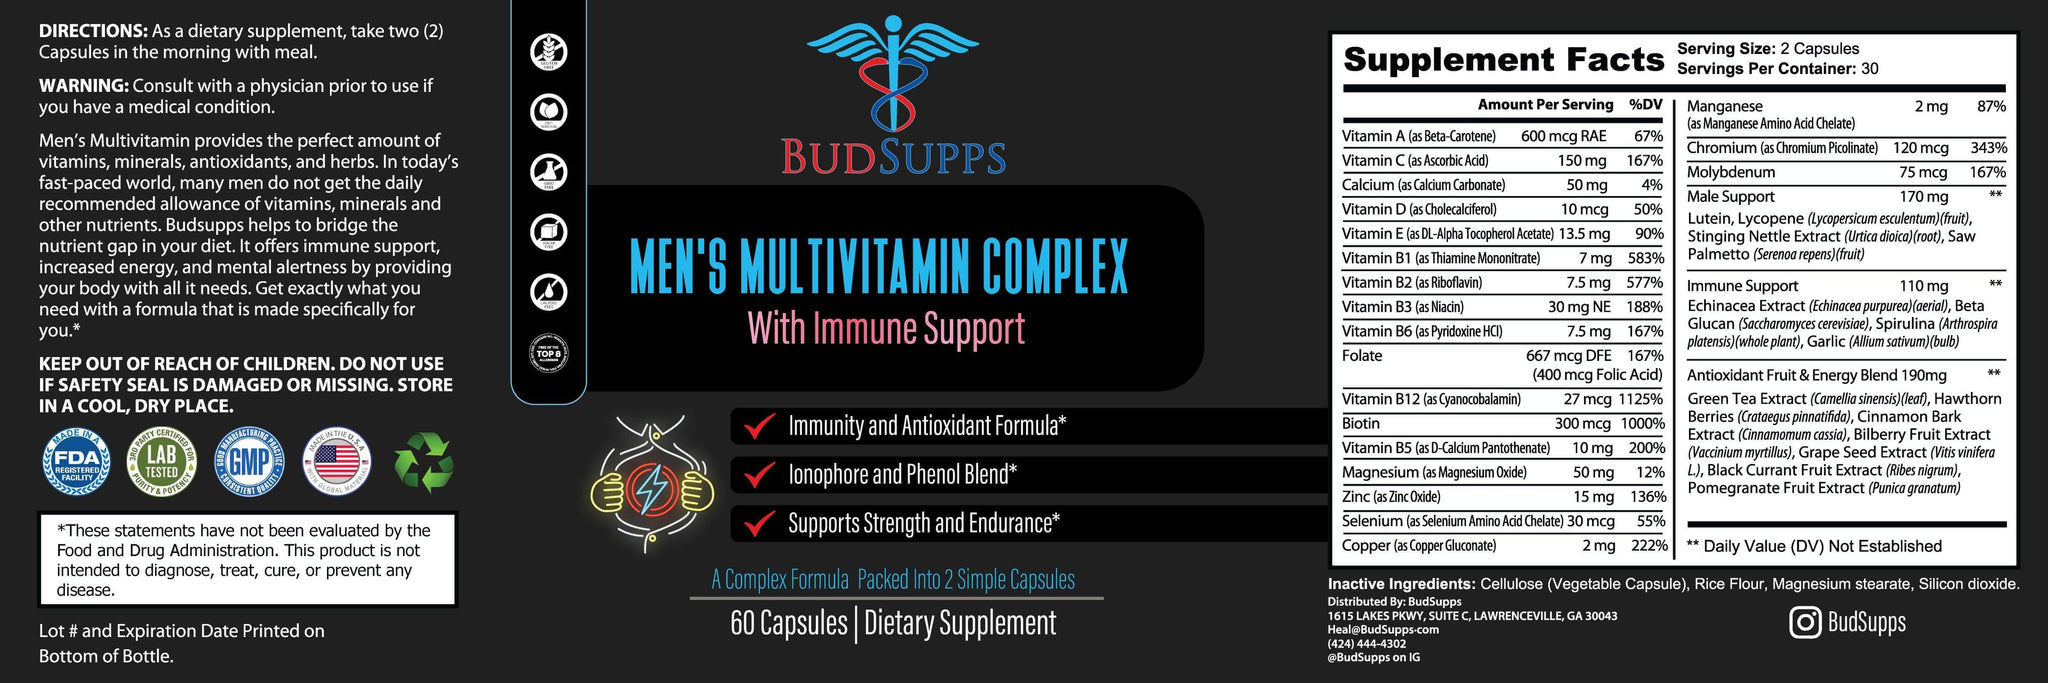 Men's multivitamin Complex (With Immune Support)